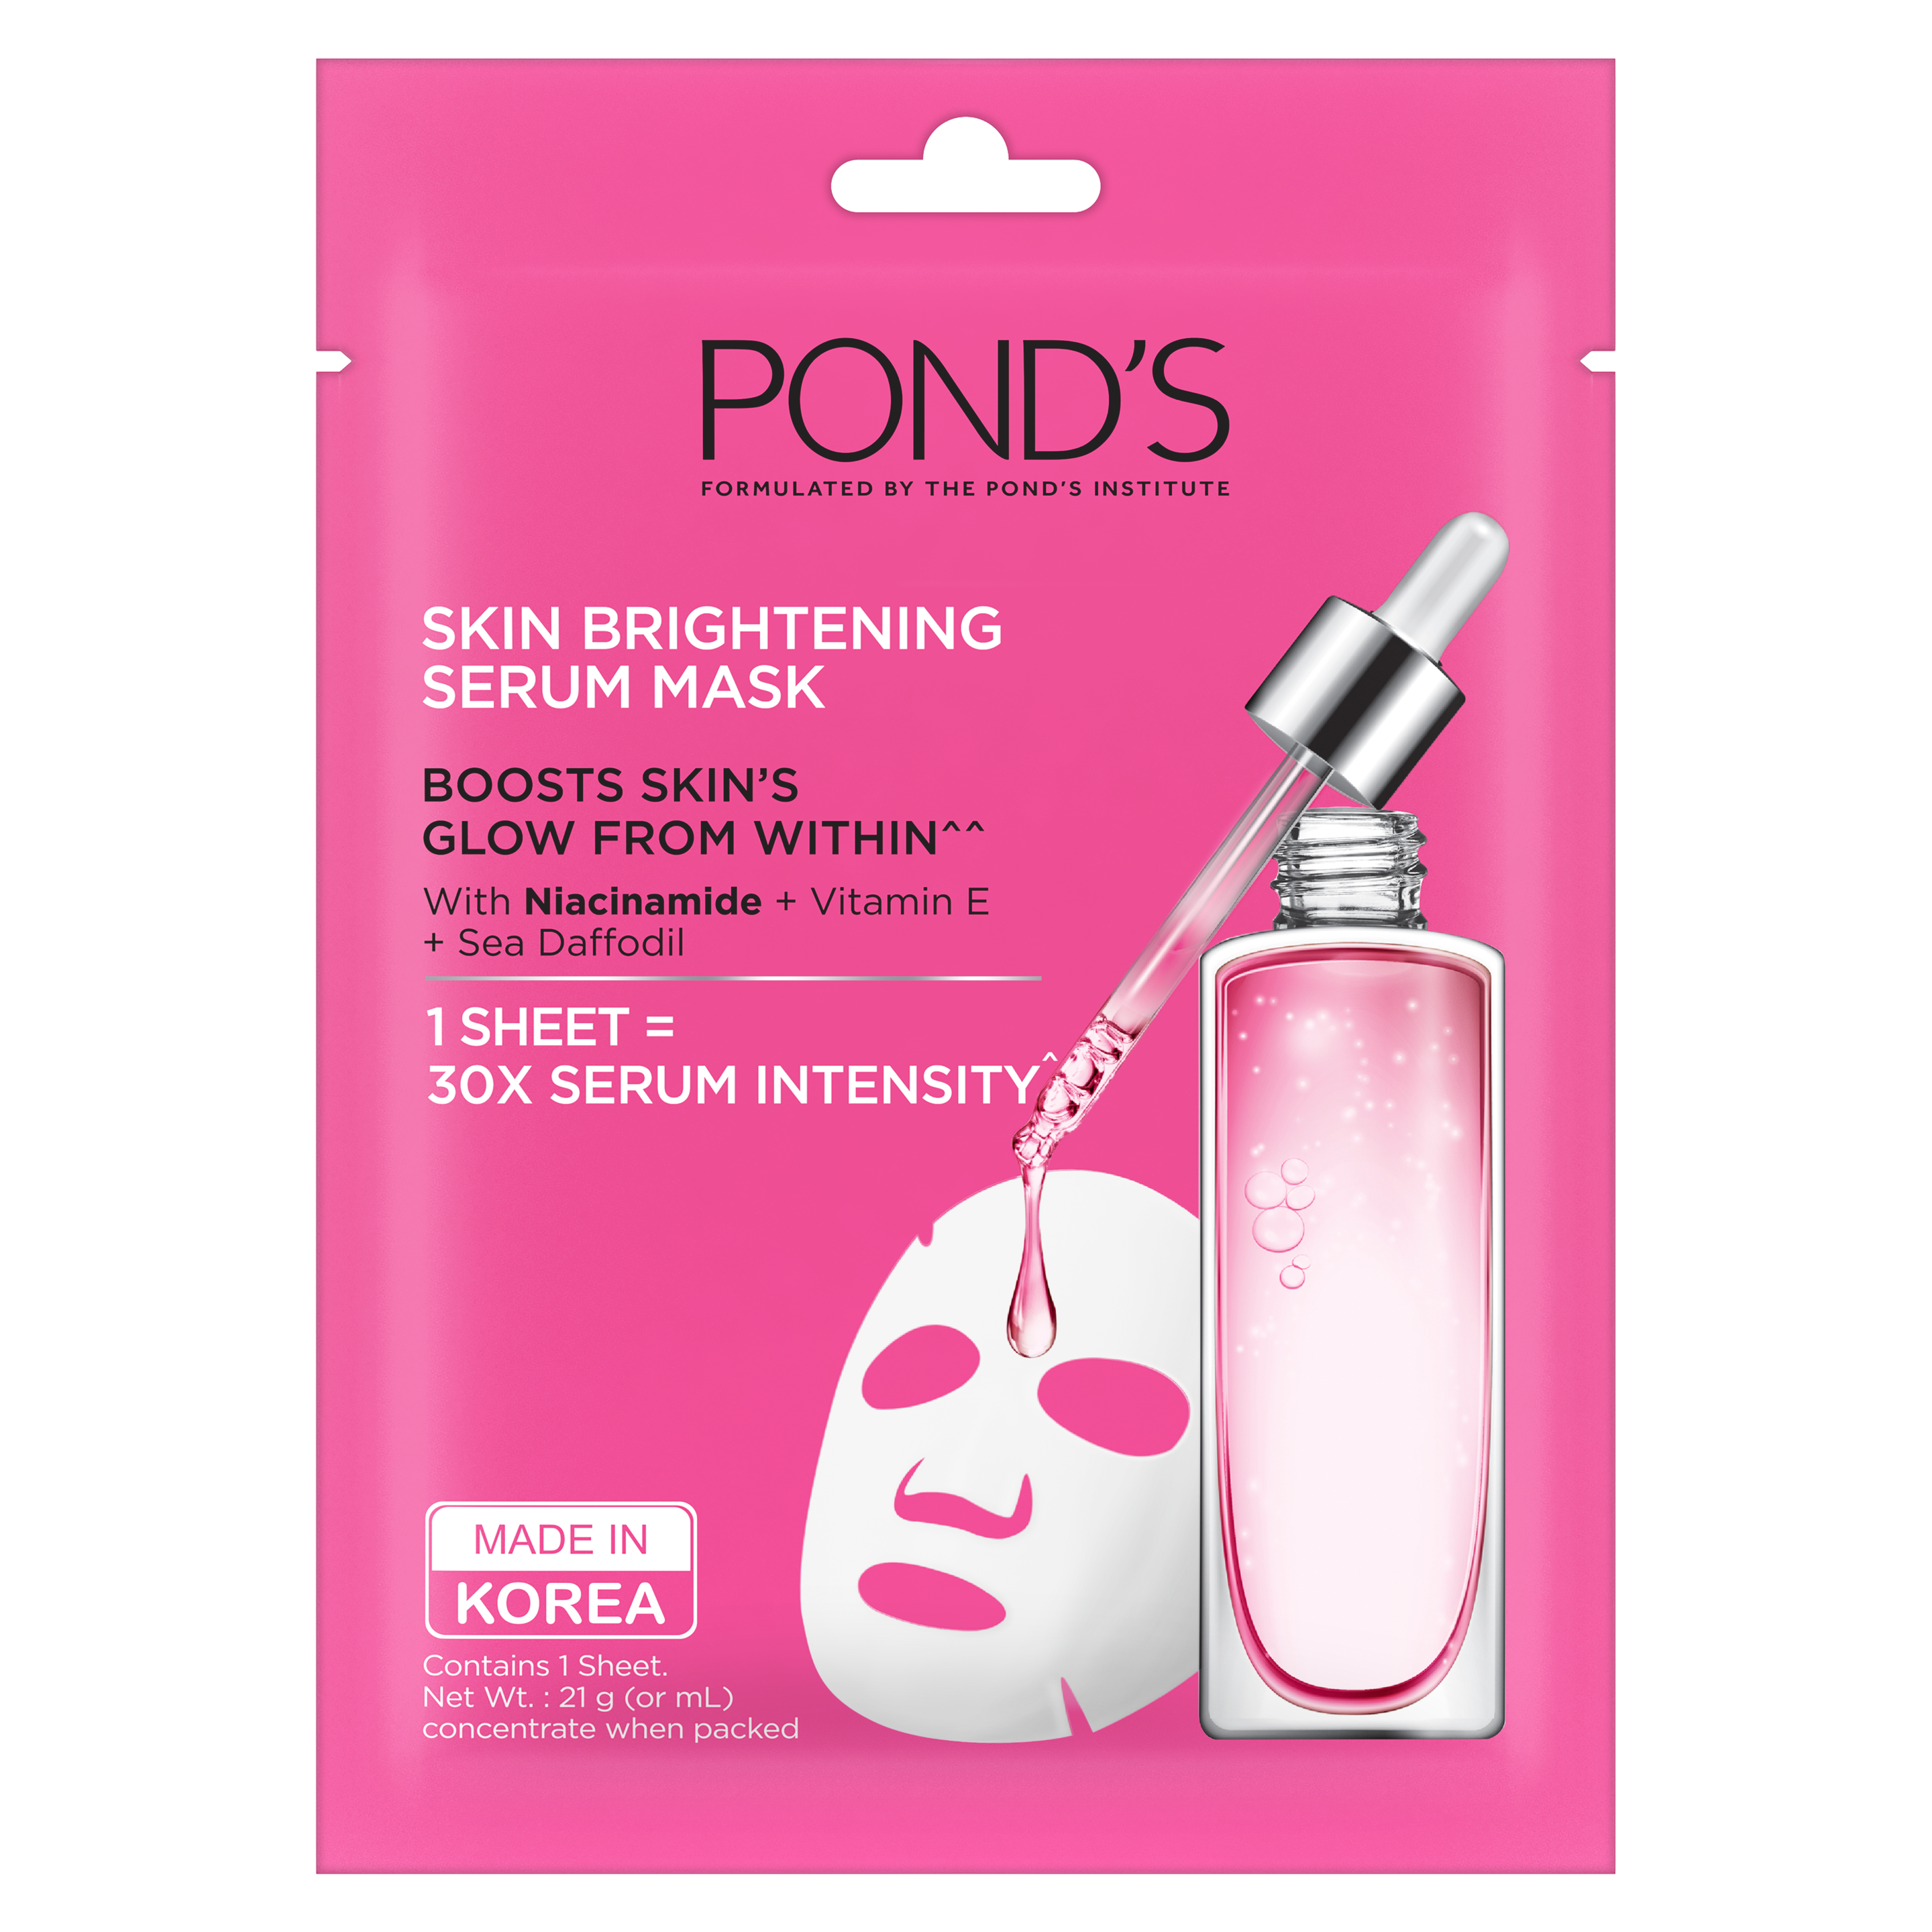 Pond's Skin Brightening Serum Mask